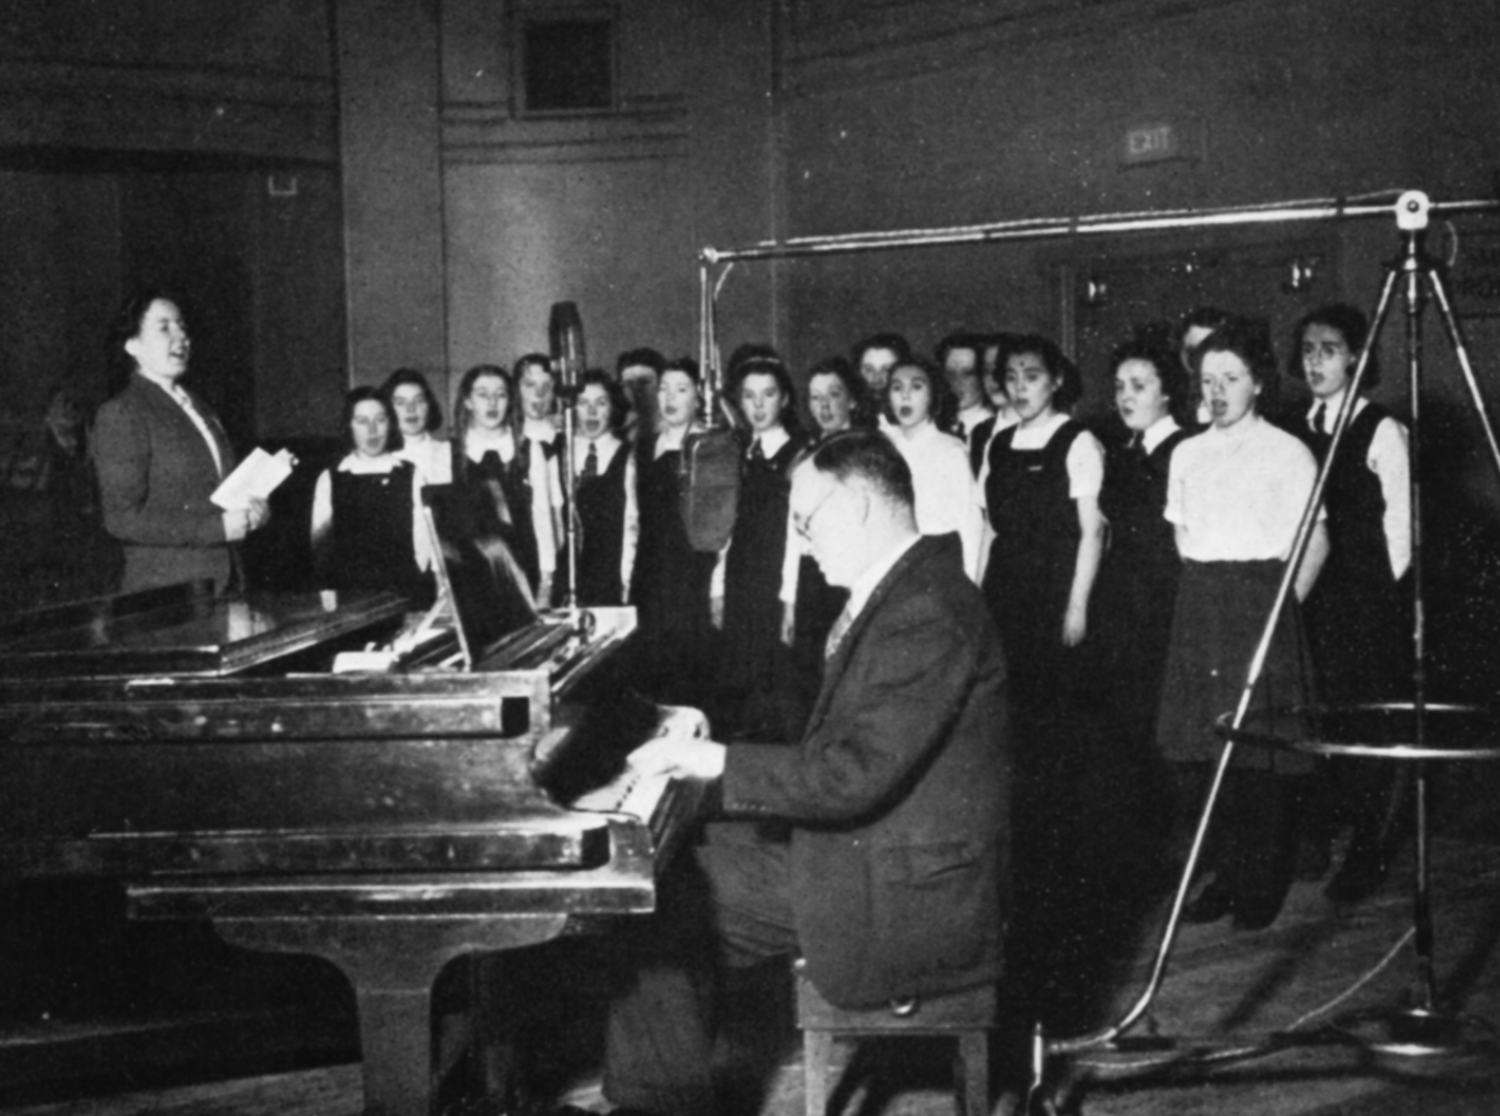 A man plays a piano with a girls' choir behind him